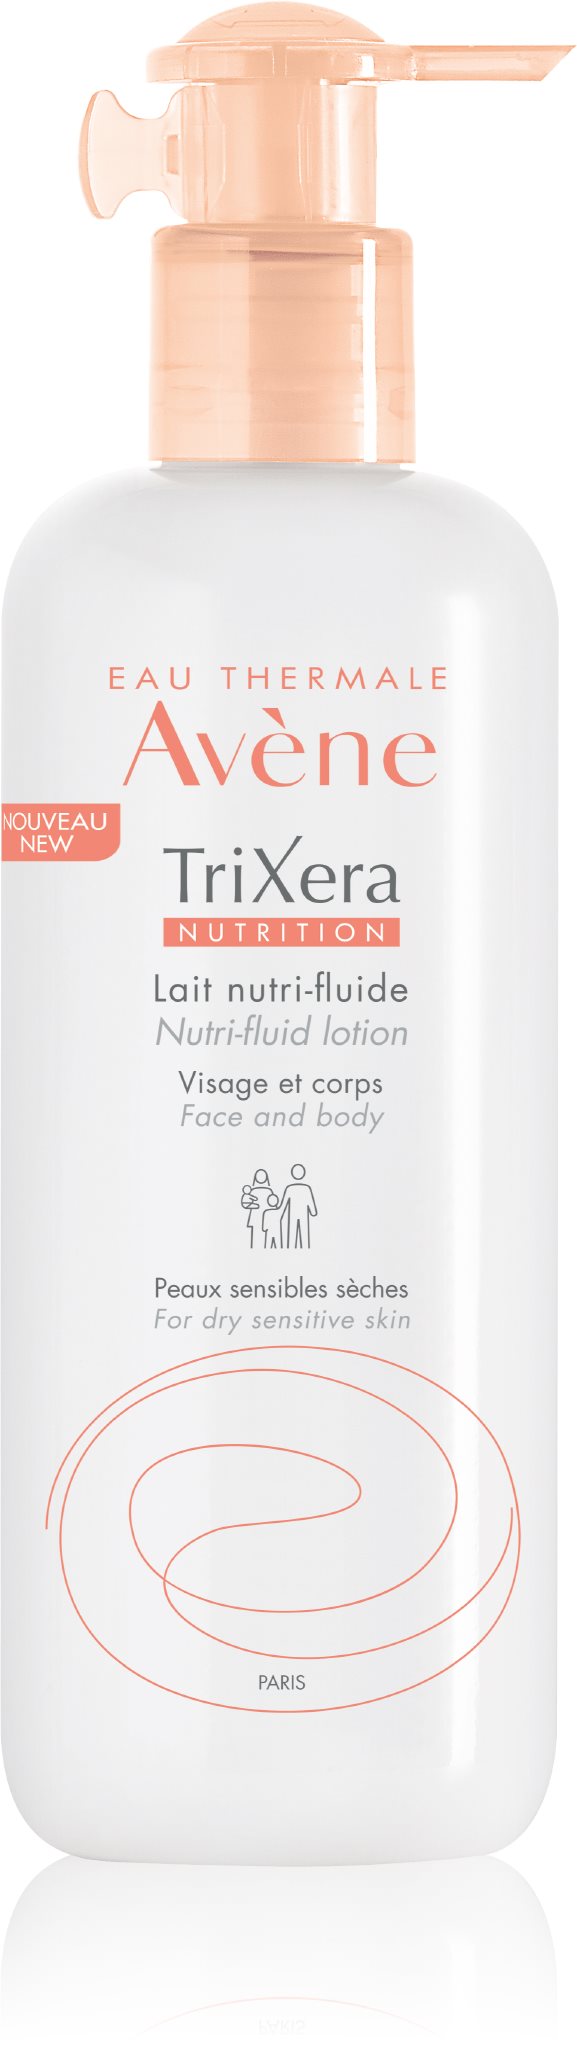 AVENE TriXera NUTRITION Nutri-Fluid Lotion 400 ml